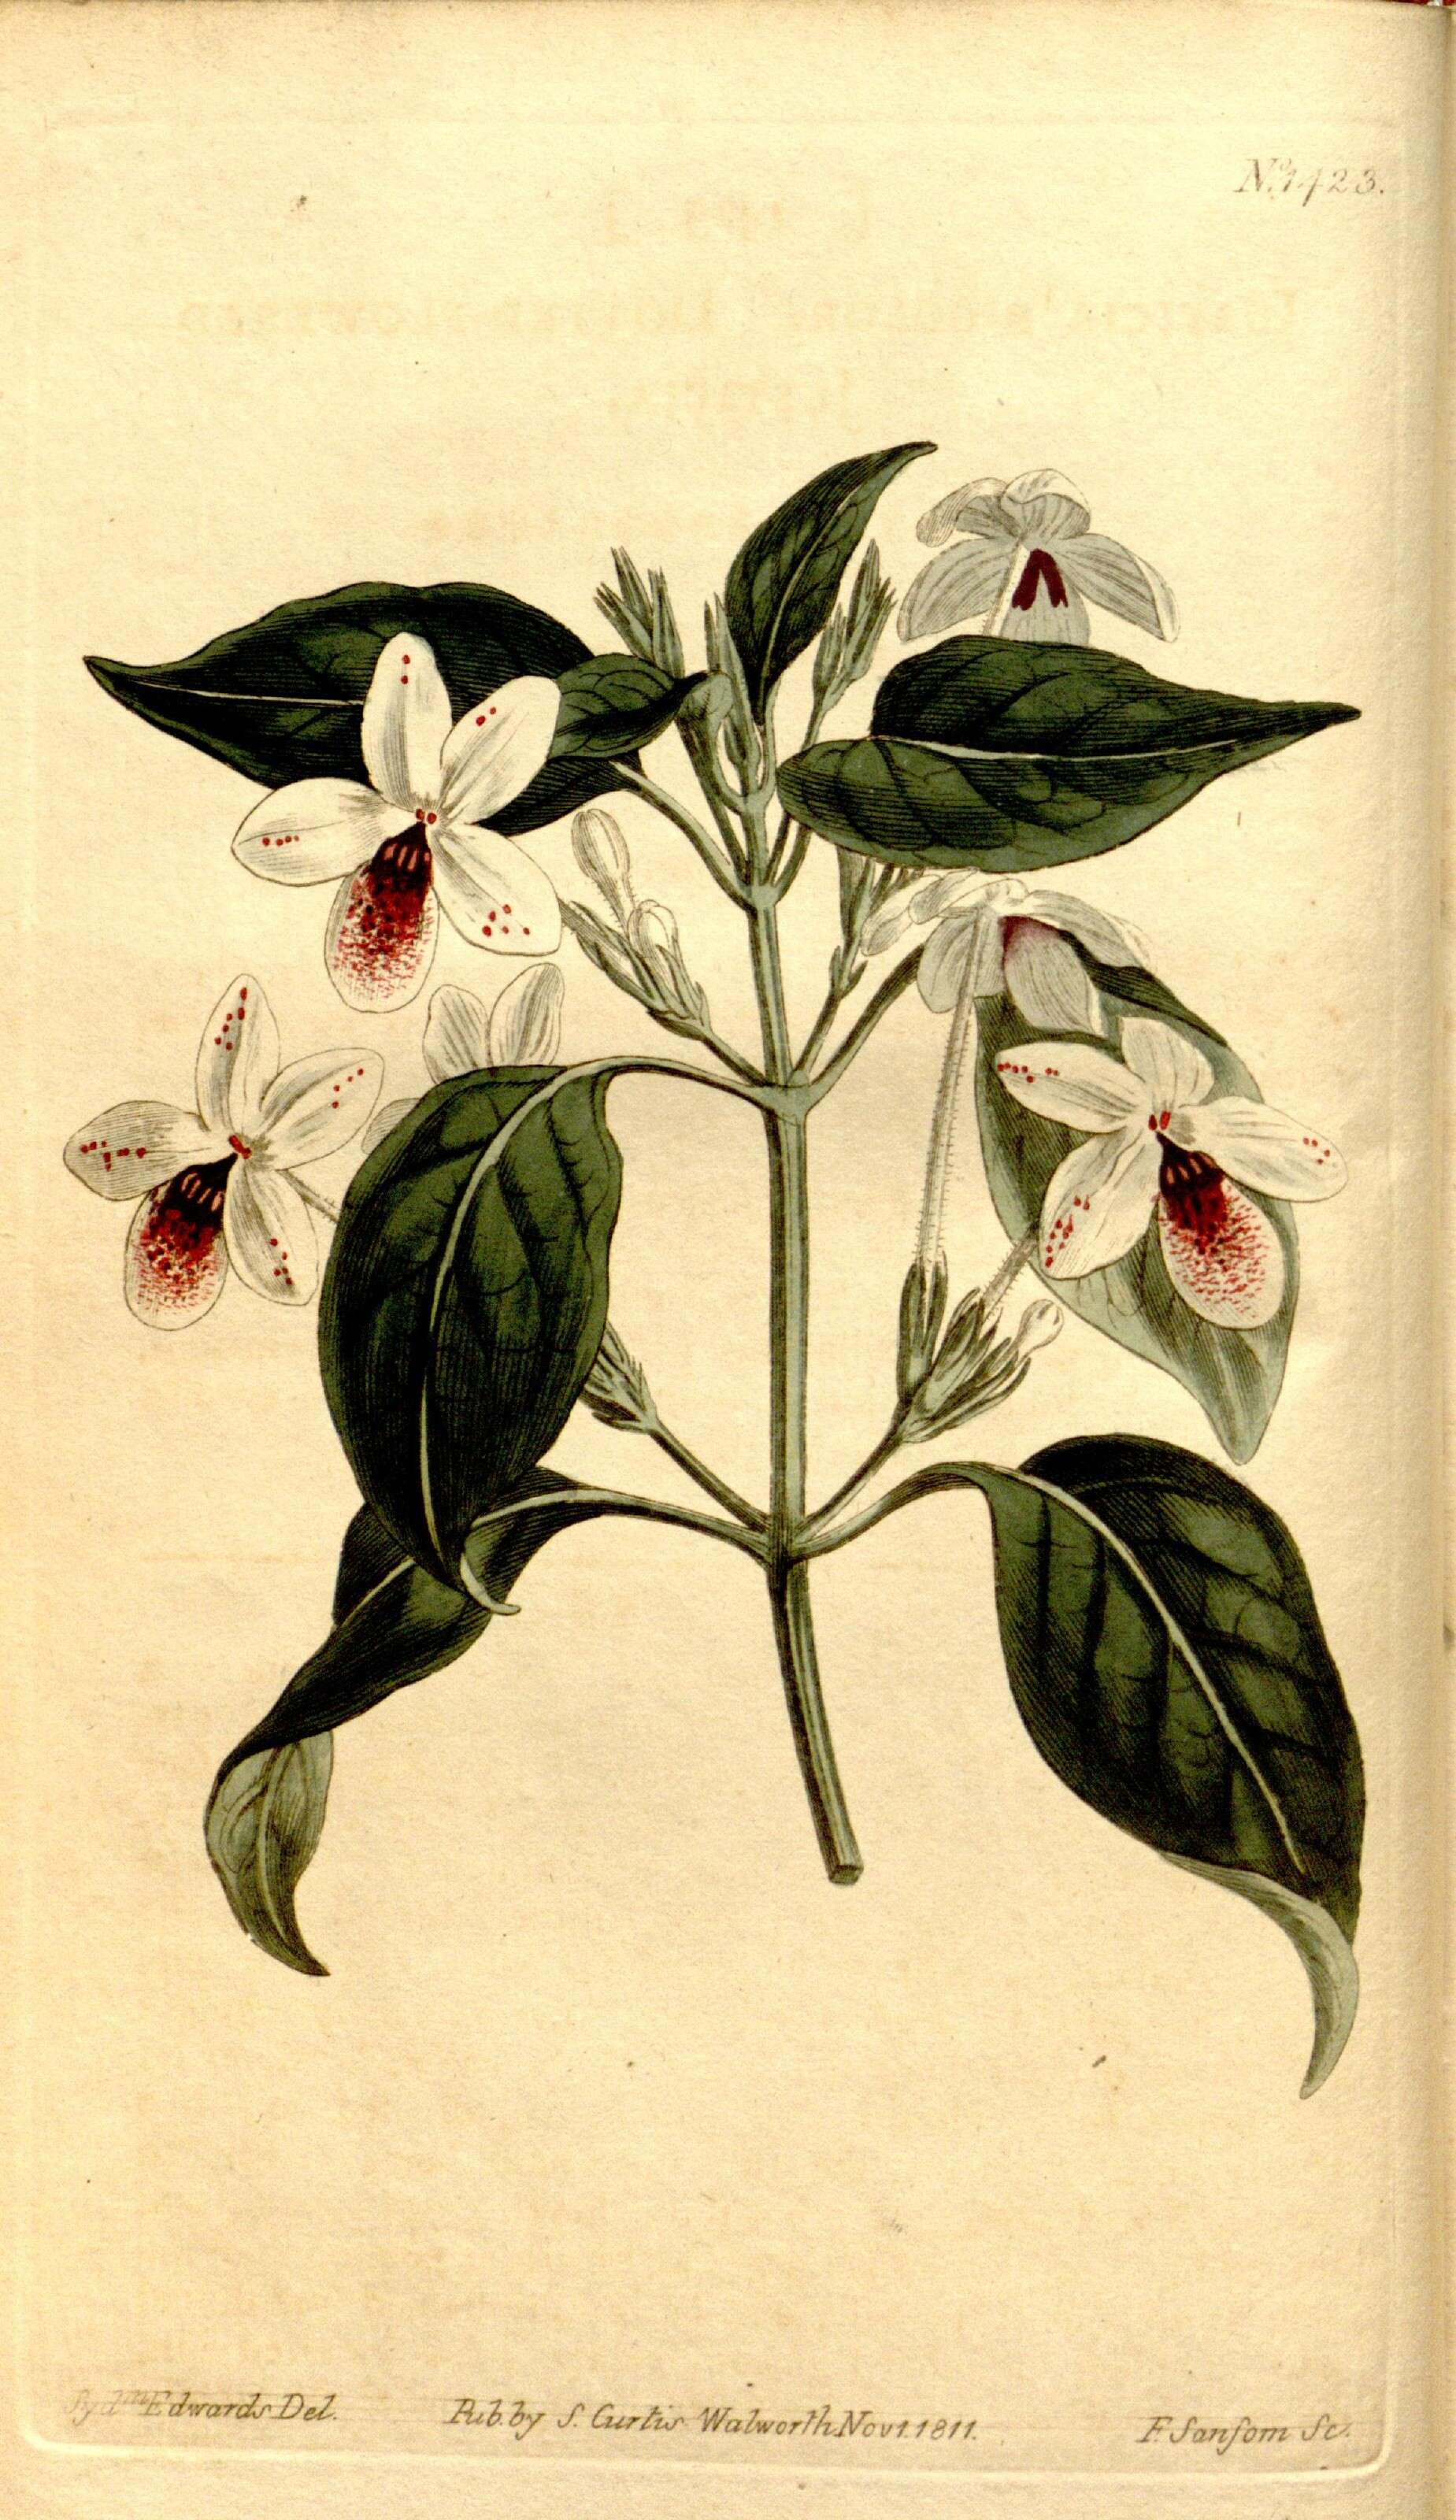 Pseuderanthemum bicolor (Sims) Radlk. resmi